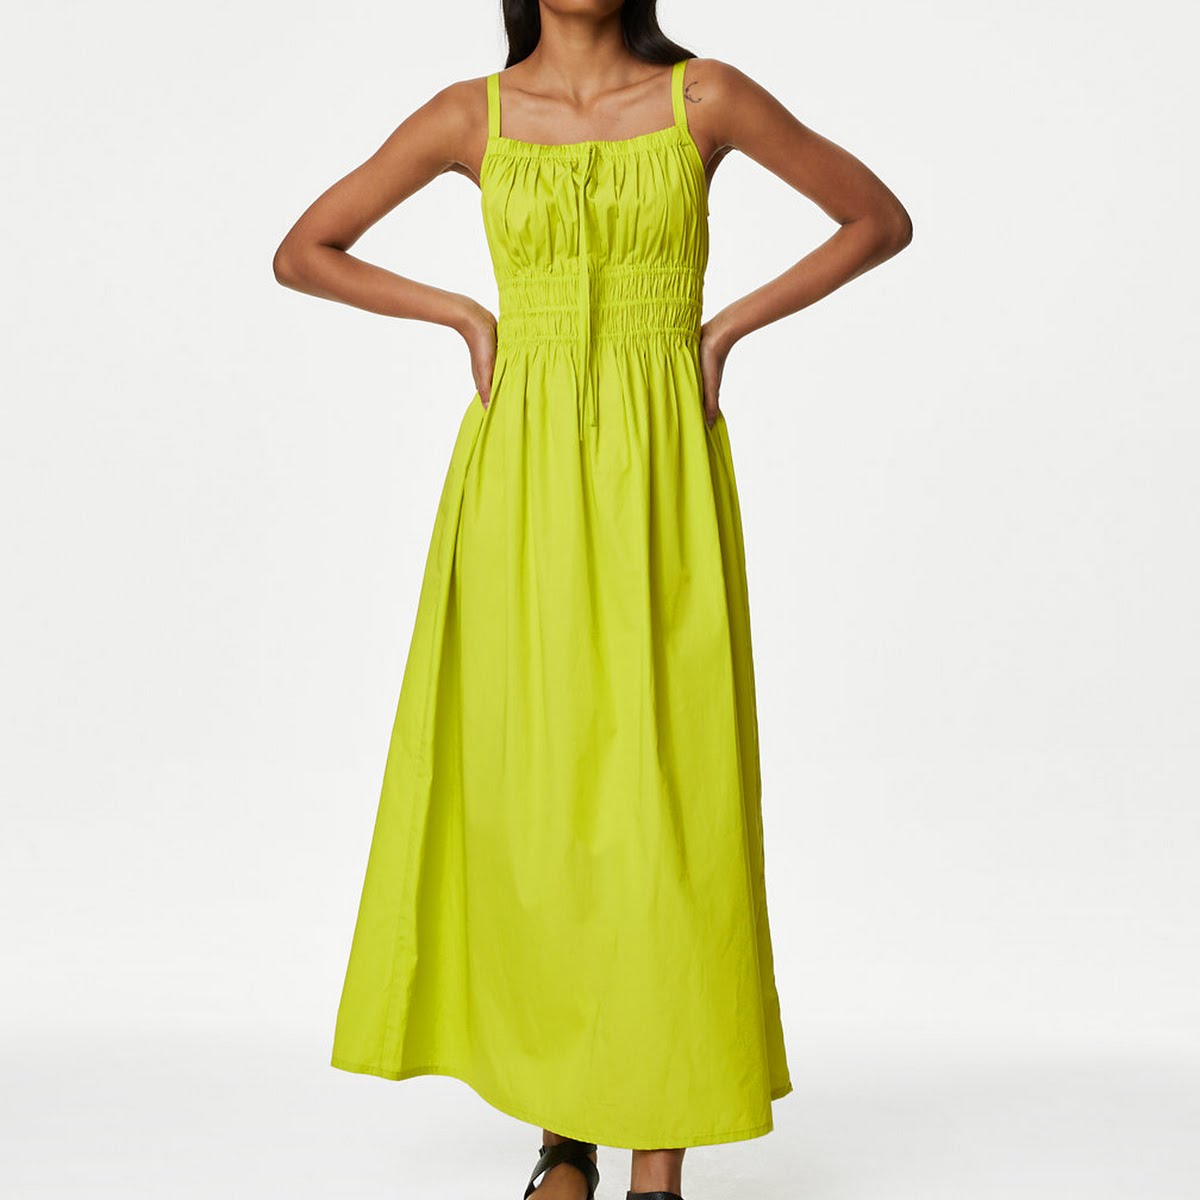 M&S, Smocked Strappy Midaxi Dress, €59.99